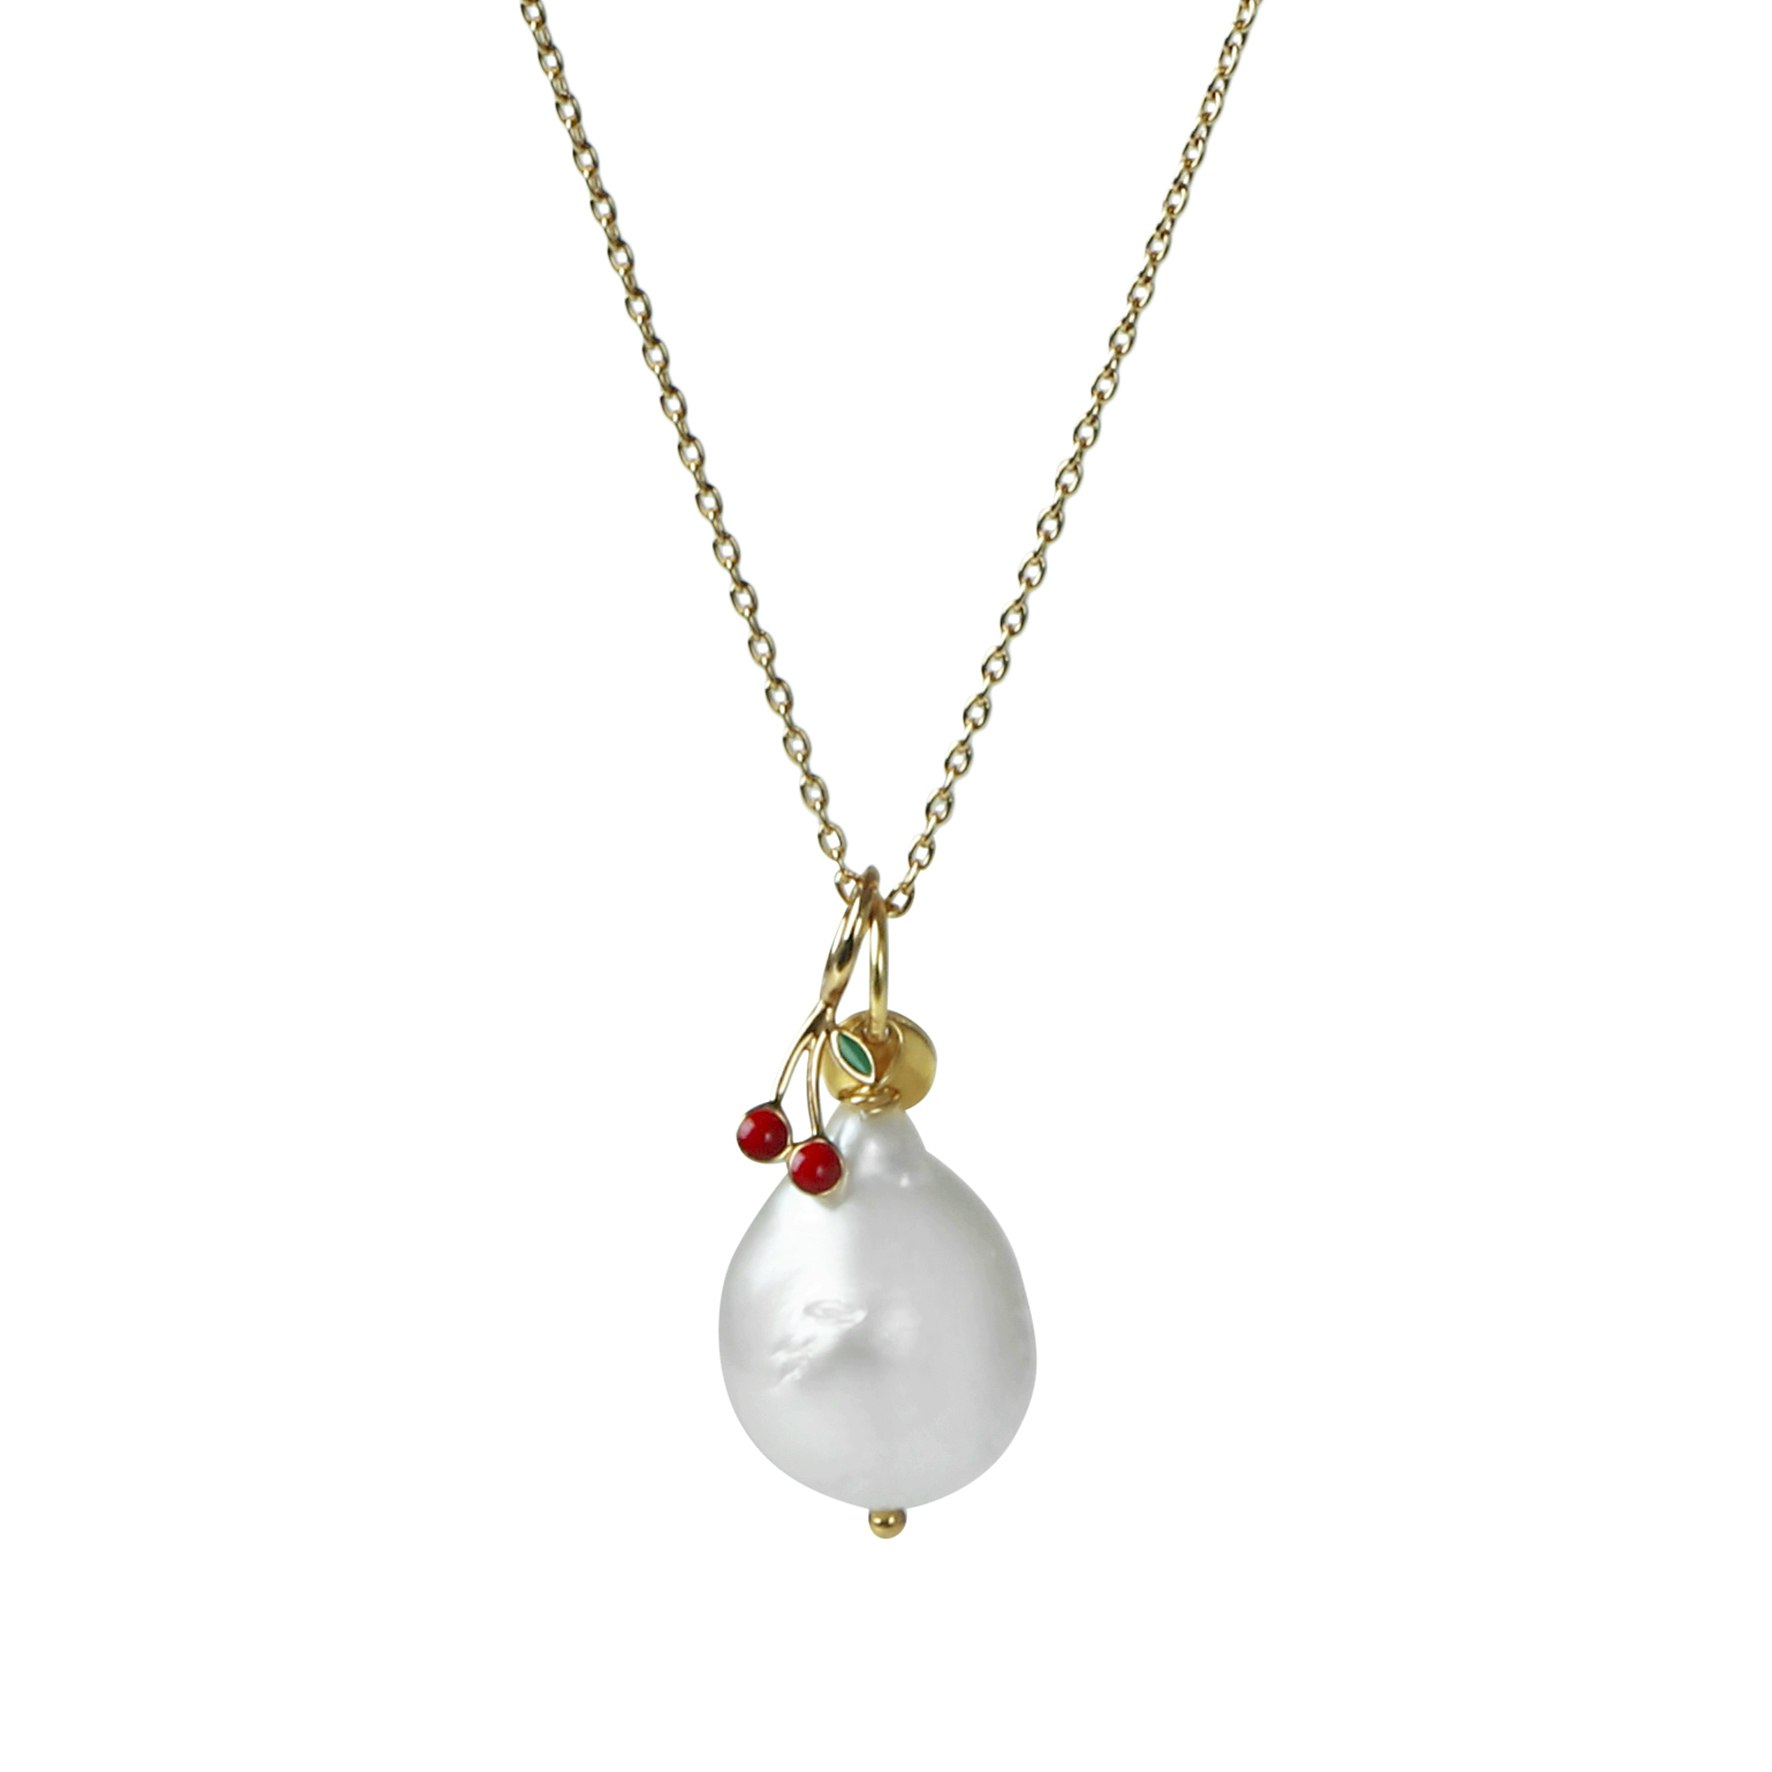 Baroque Pearl Pendant van STINE A Jewelry in Verguld-Zilver Sterling 925